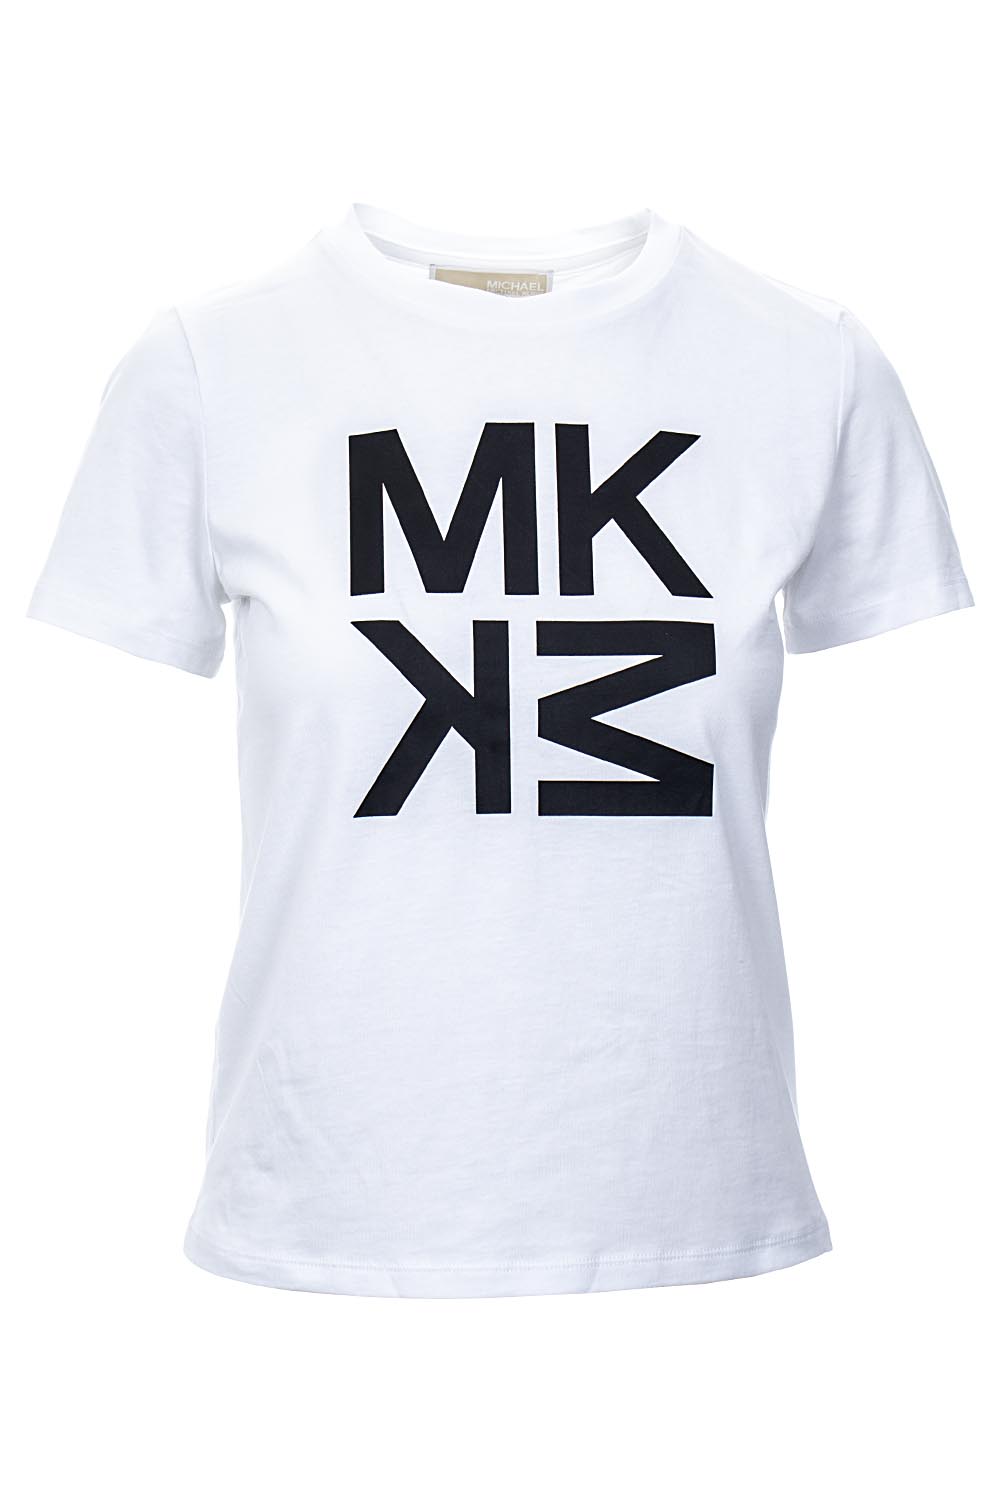 Michael Kors Dámské tričko bílé s monogramem MK Velikost: XS